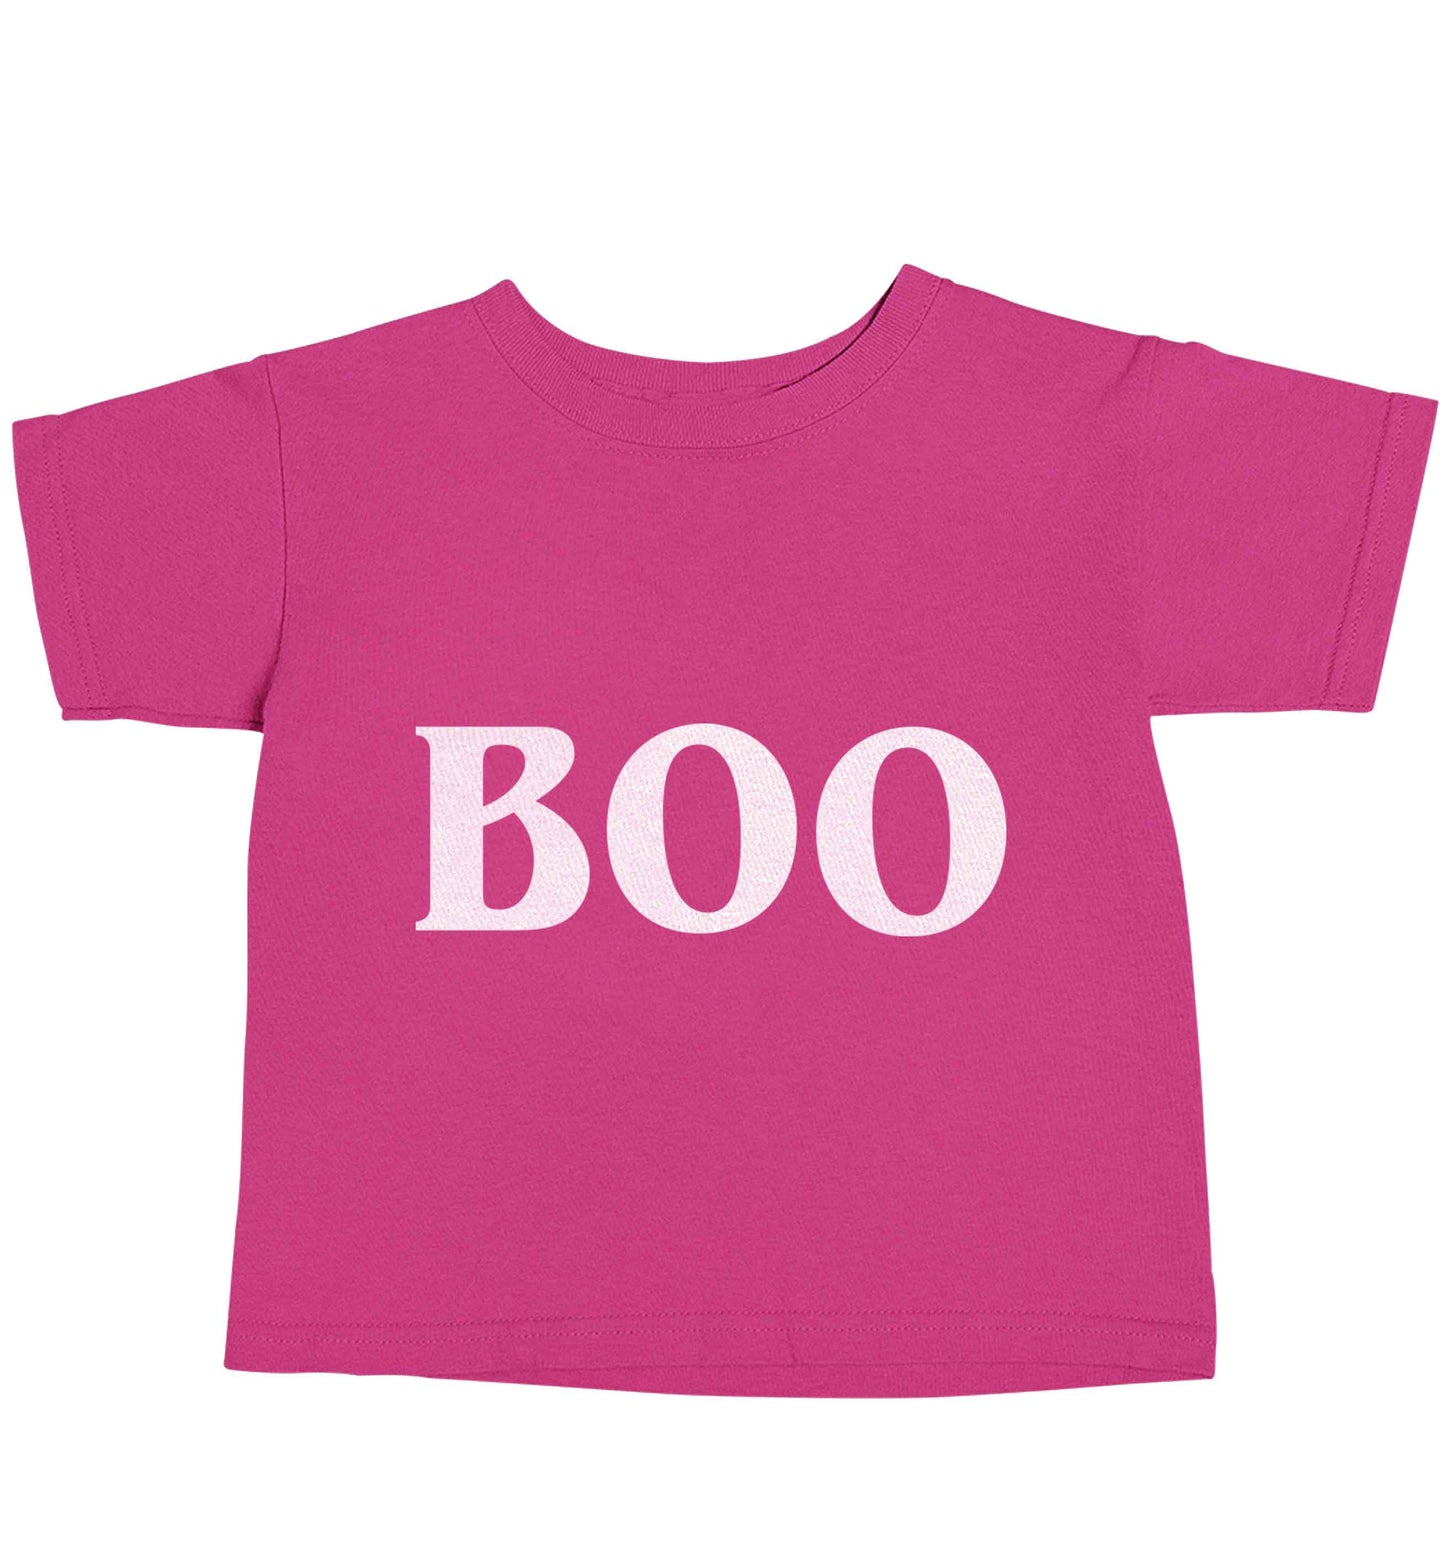 Boo pink baby toddler Tshirt 2 Years